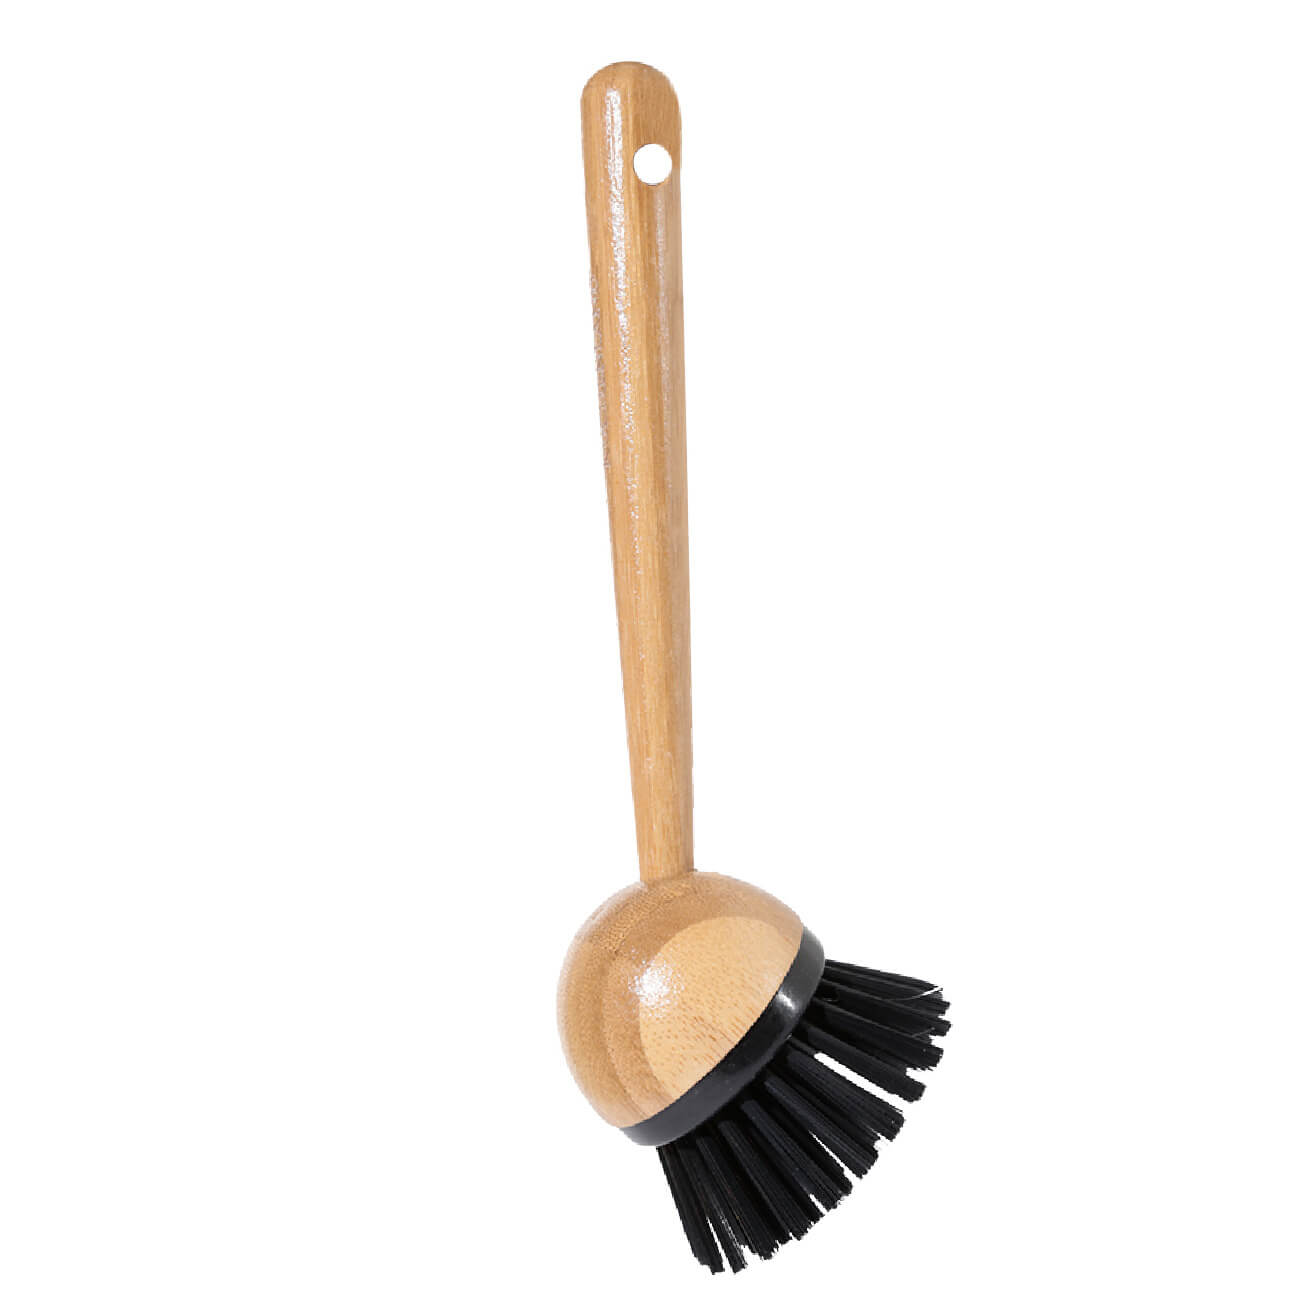 Щетка для уборки, 21 см, пластик/бамбук, черная, Black clean щетка зубная бамбук черная щетина eco life